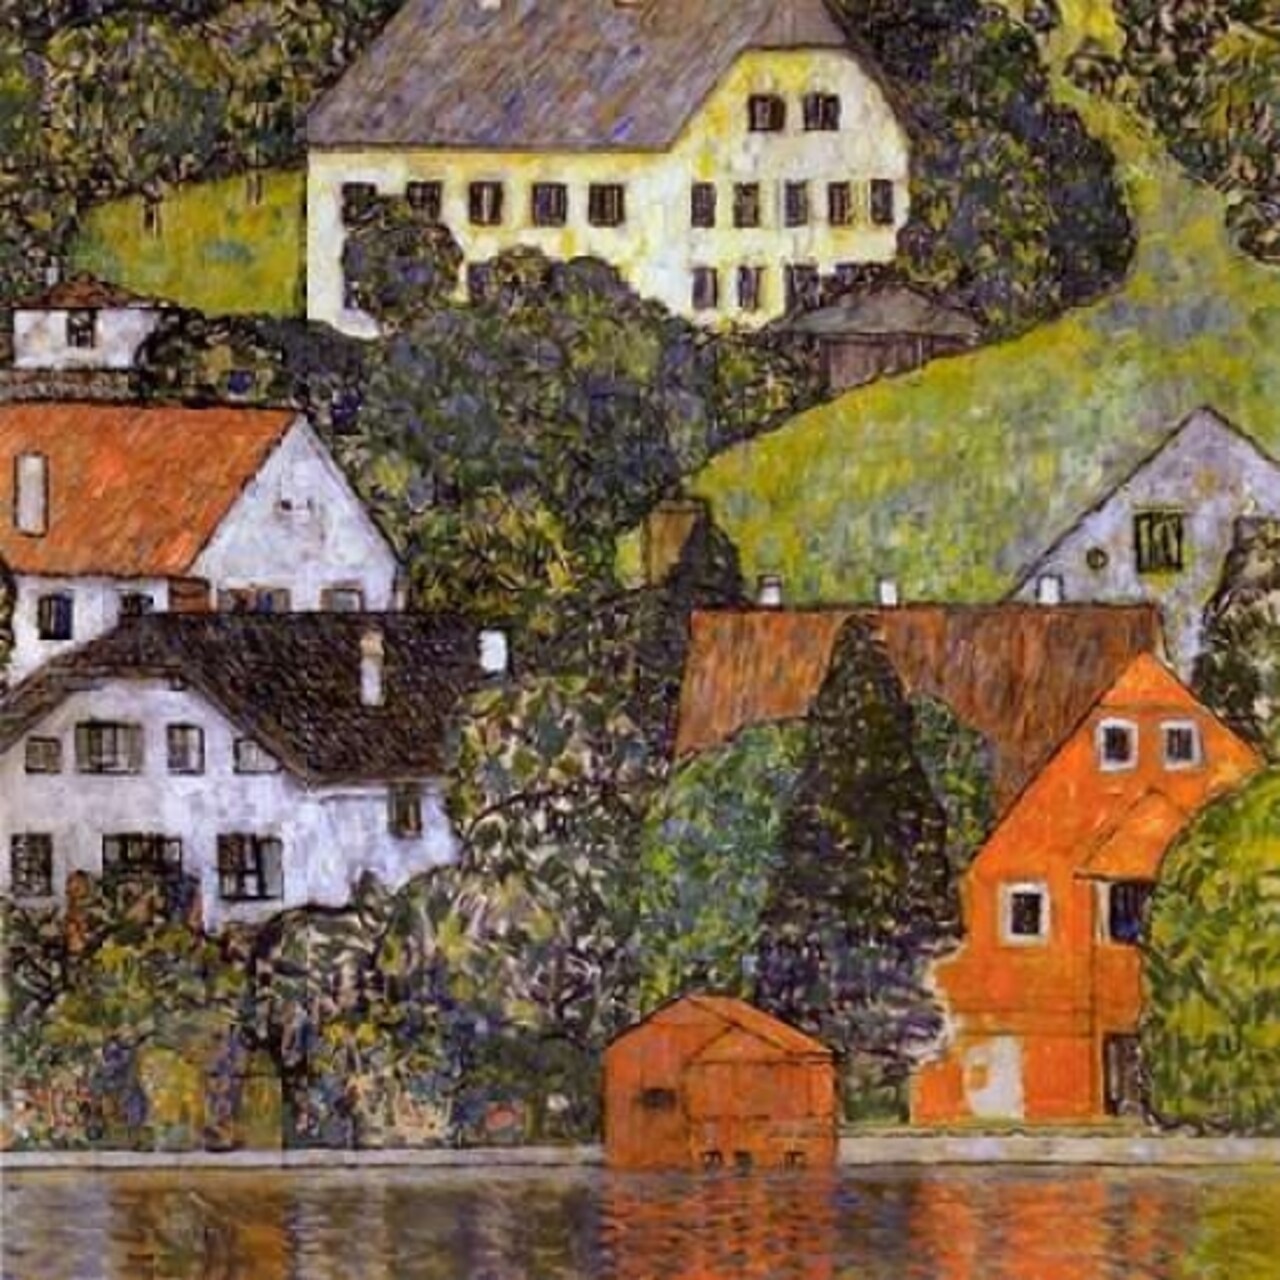 Houses In Unterach On Lake Atter 1916 Poster Print by  Gustav Klimt - Item # VARPDX373343